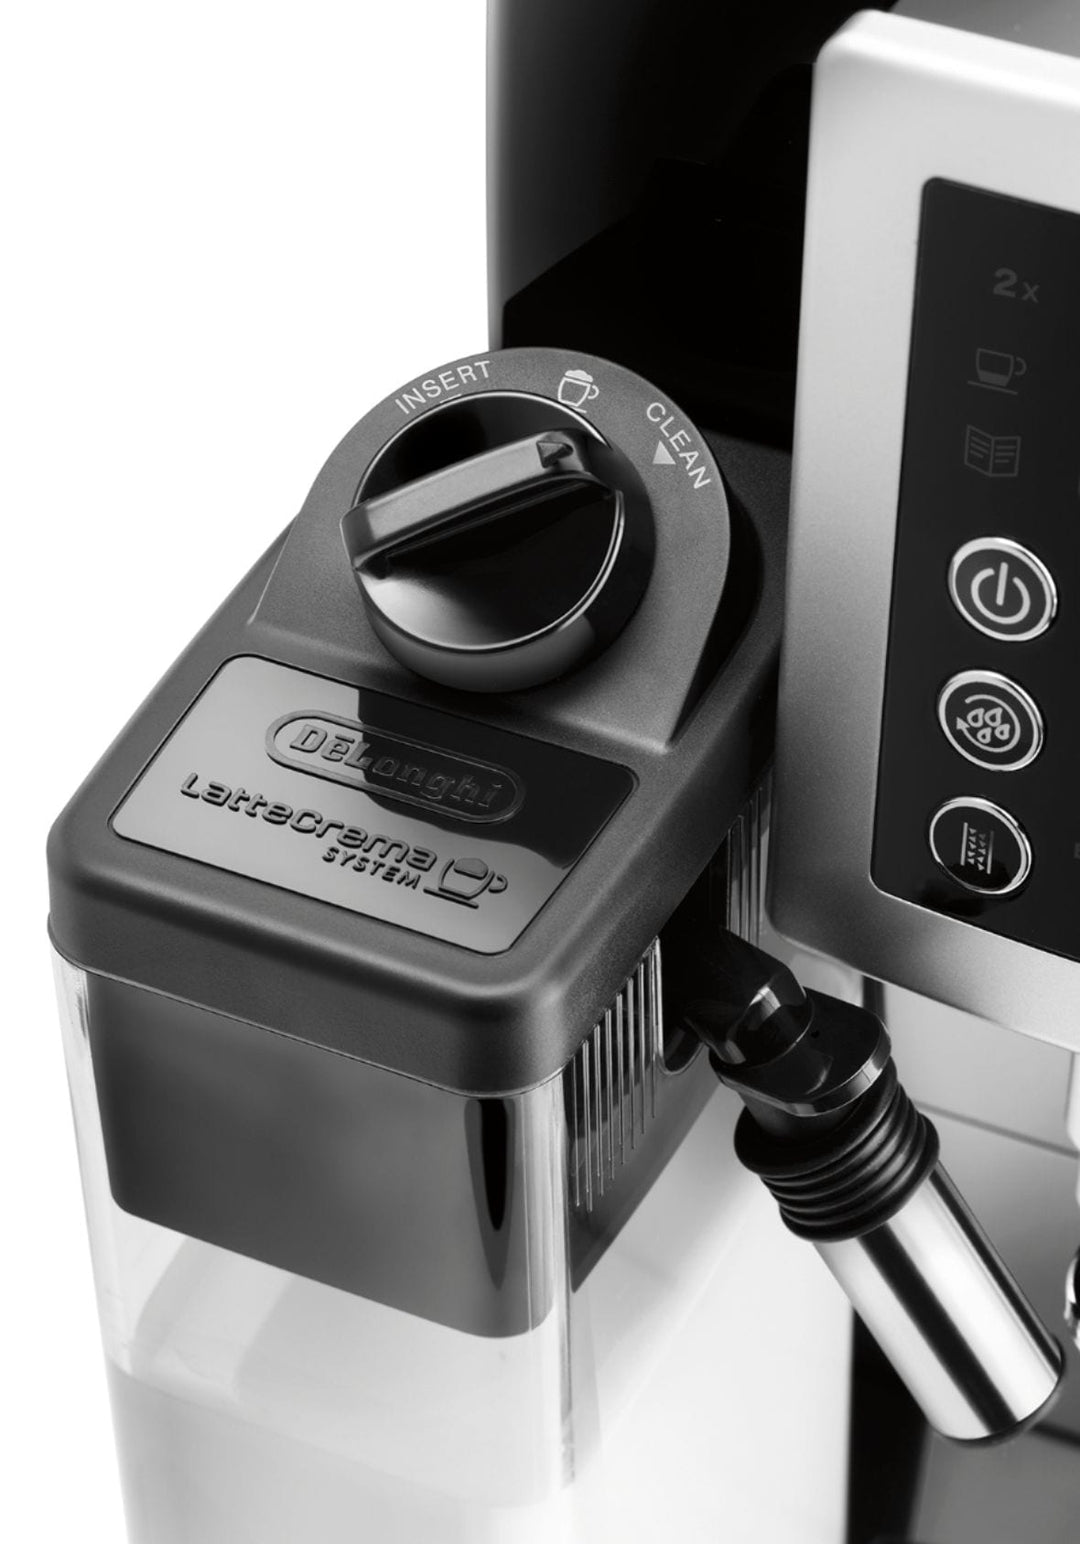 De'Longhi - Magnifica S Espresso Machine with 15 bars of pressure and intergrated grinder - Silver/Black_2